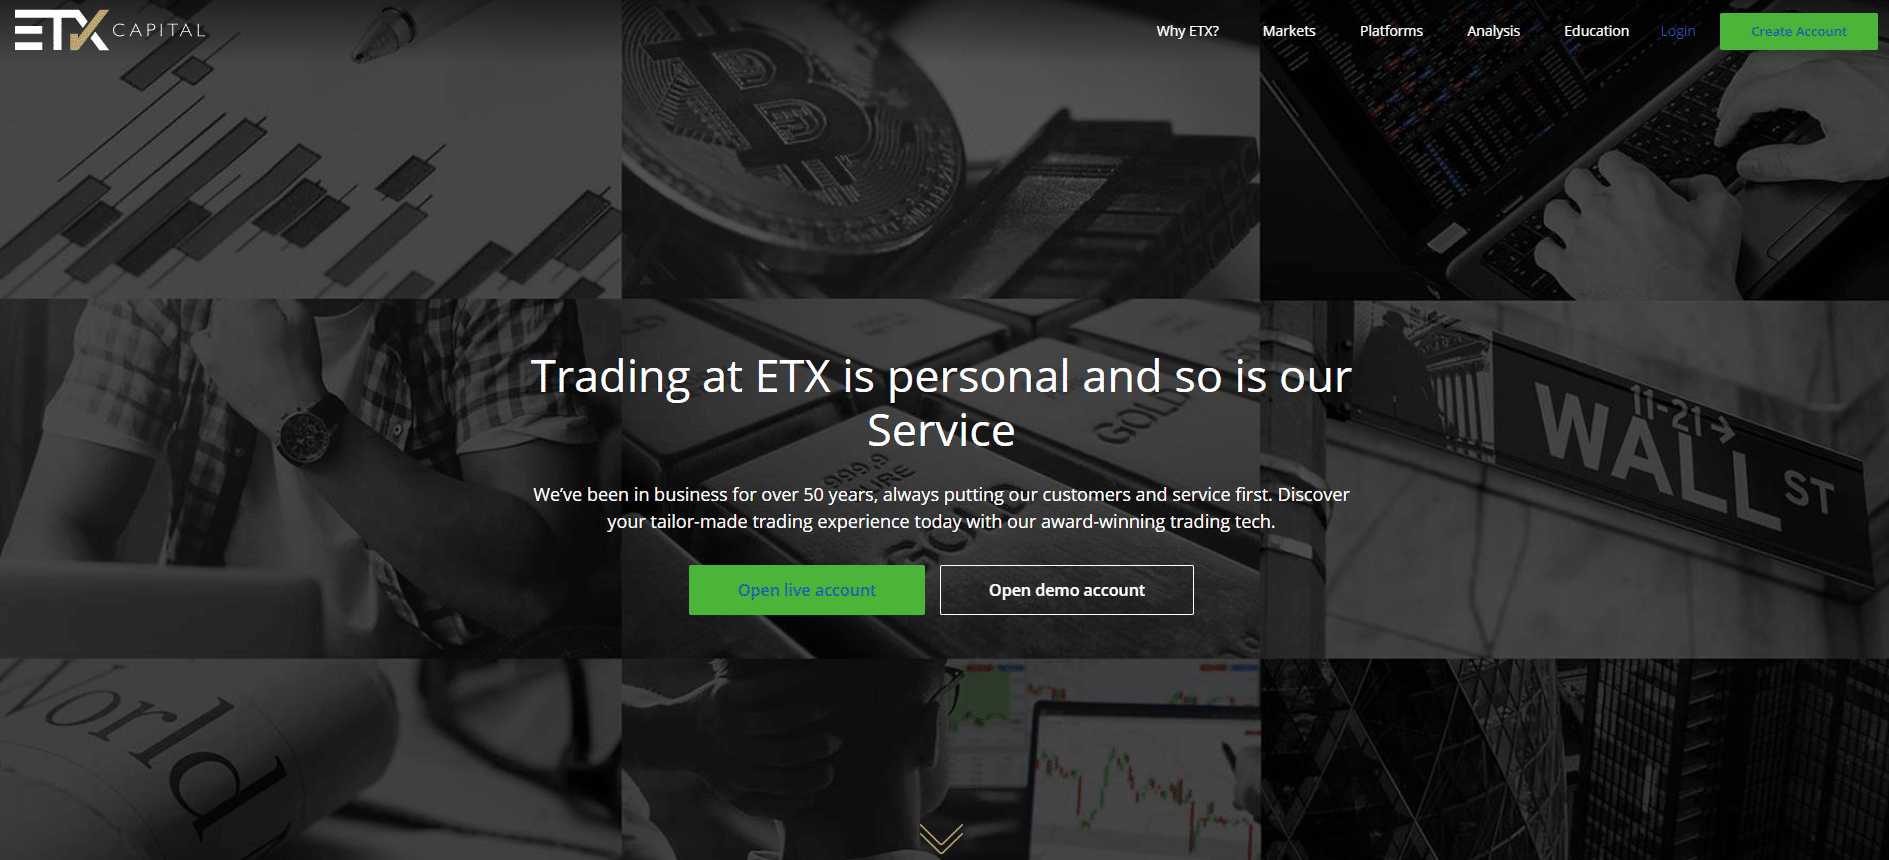 ETX Capital official website